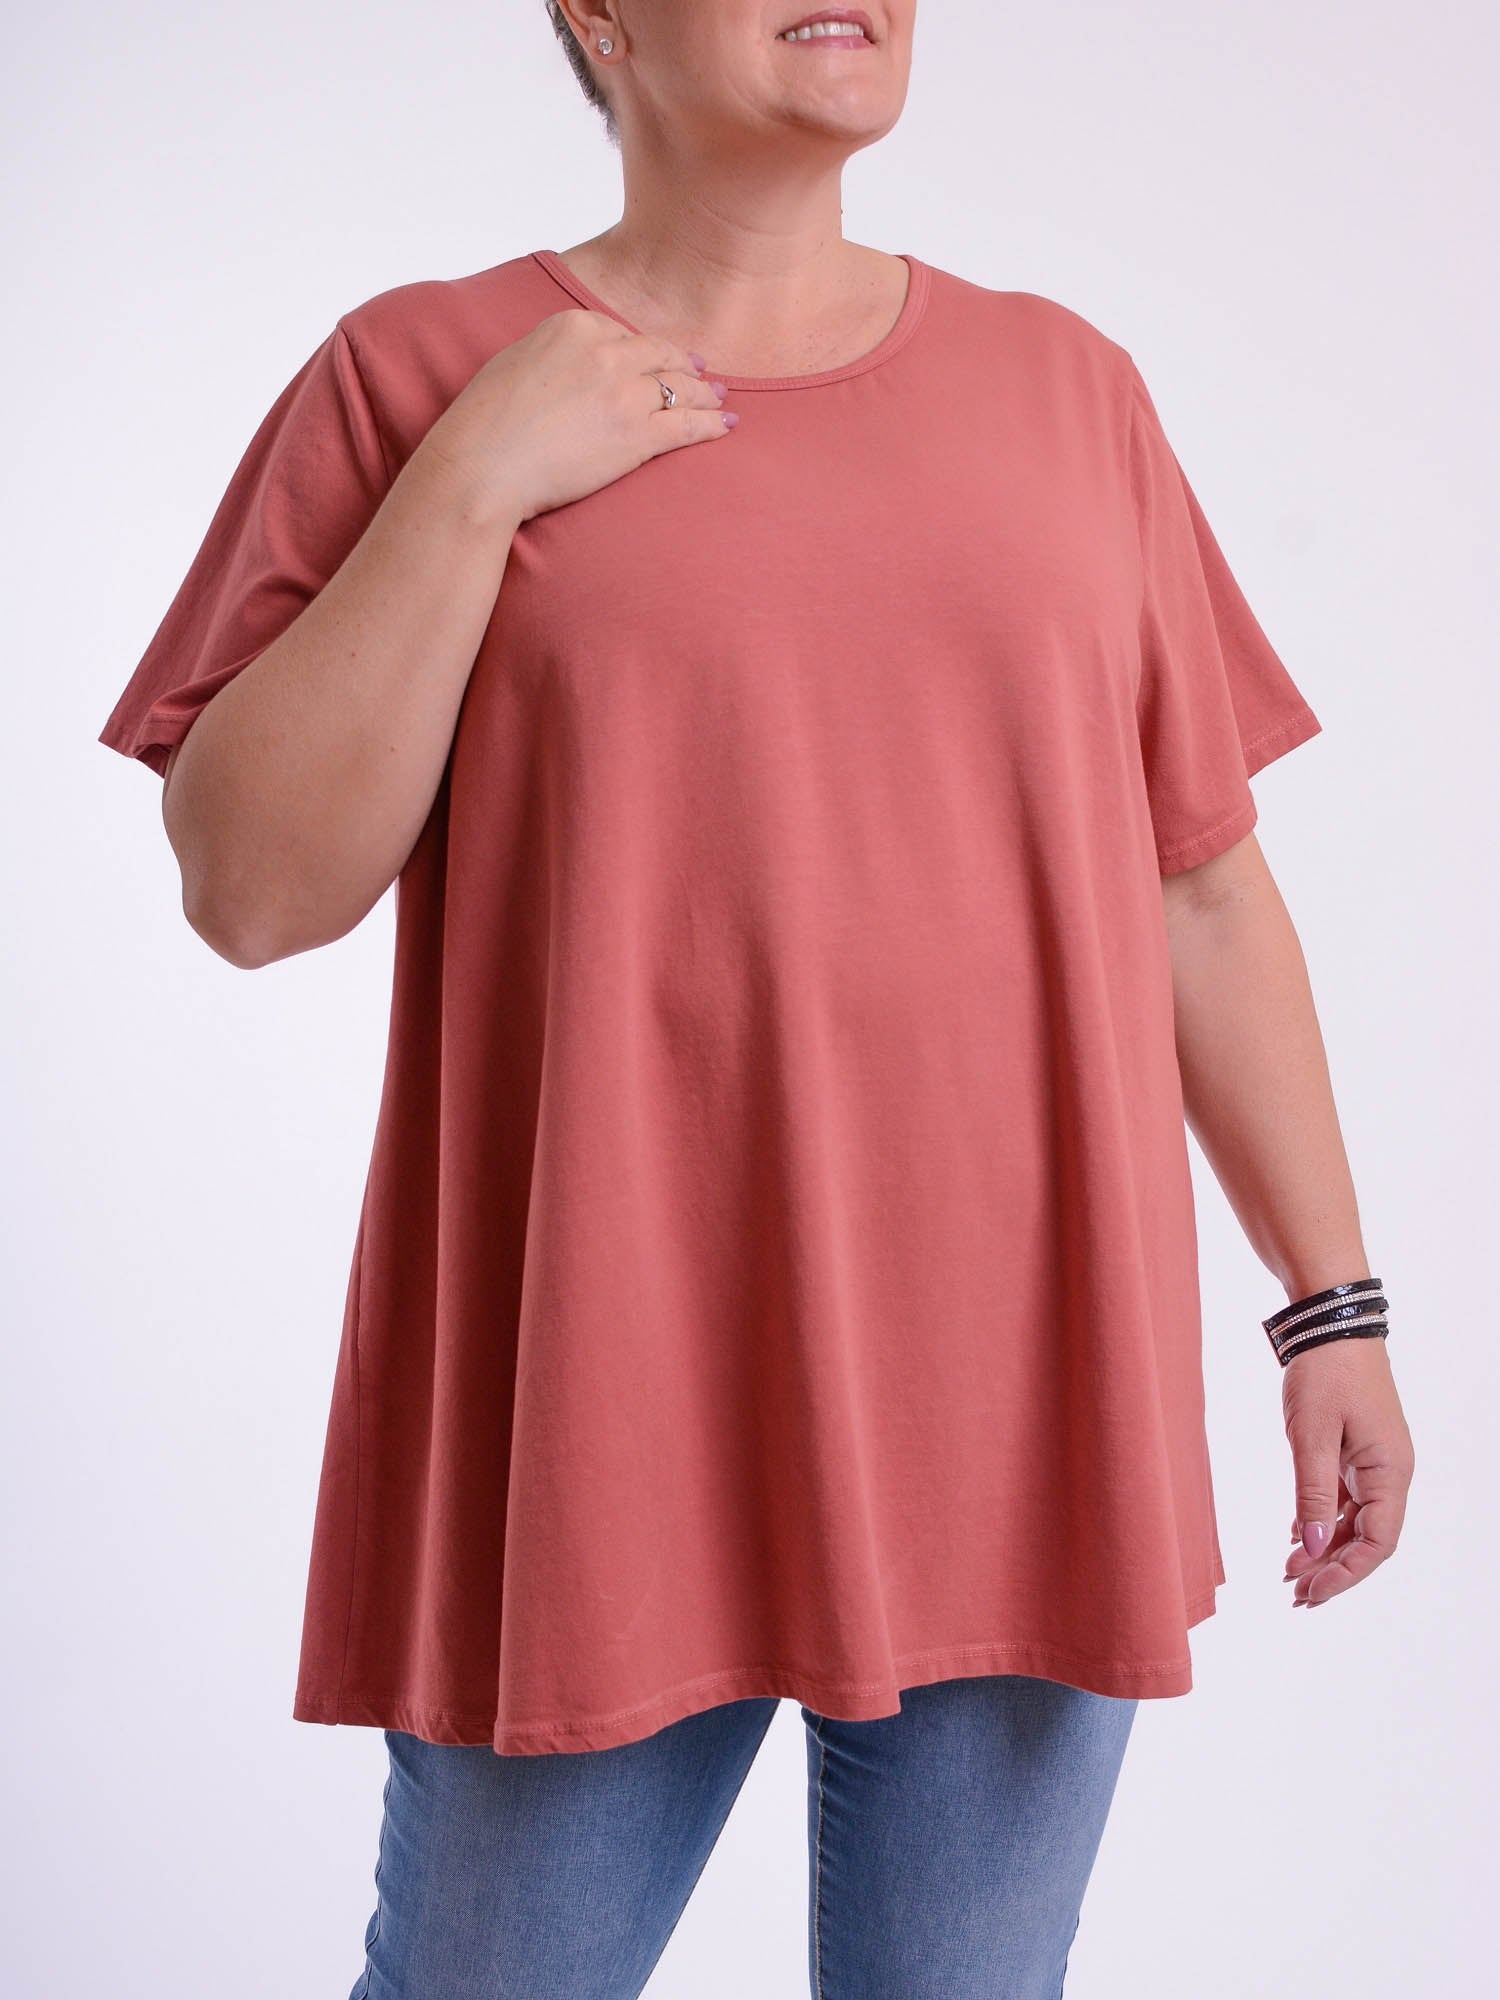 Basic Cotton Swing T Shirt - Round Neck 10516, Tops & Shirts, Pure Plus Clothing, Lagenlook Clothing, Plus Size Fashion, Over 50 Fashion